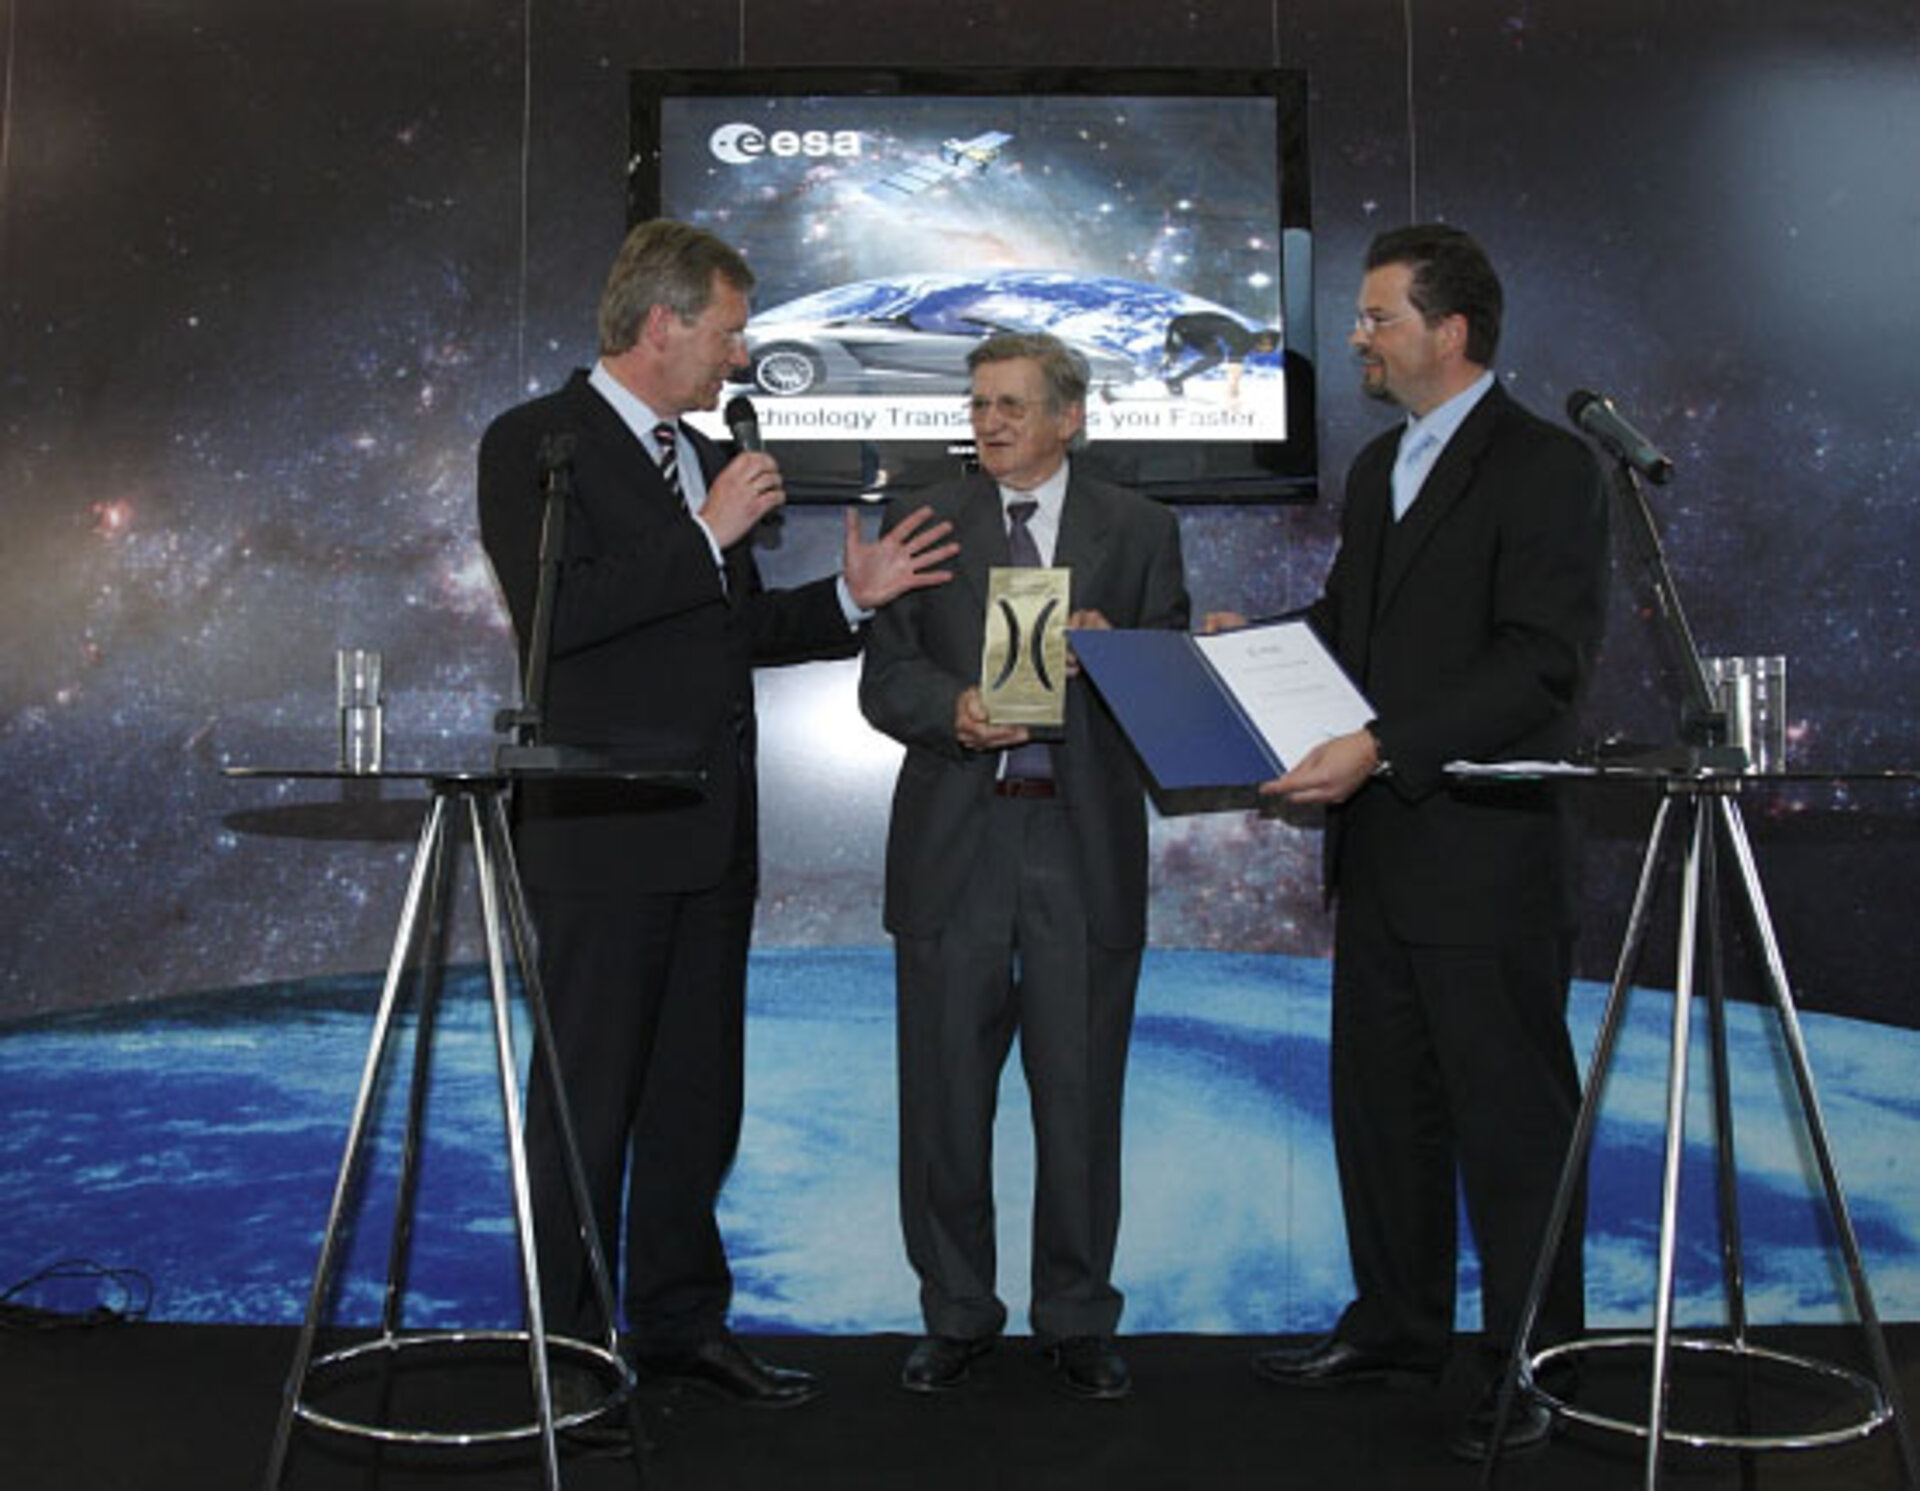 Christian Wulff (Minister President of Lower Saxony, Germany), Georg Koppenwallner (HTG), and Frank M. Salzgeber (ESA)